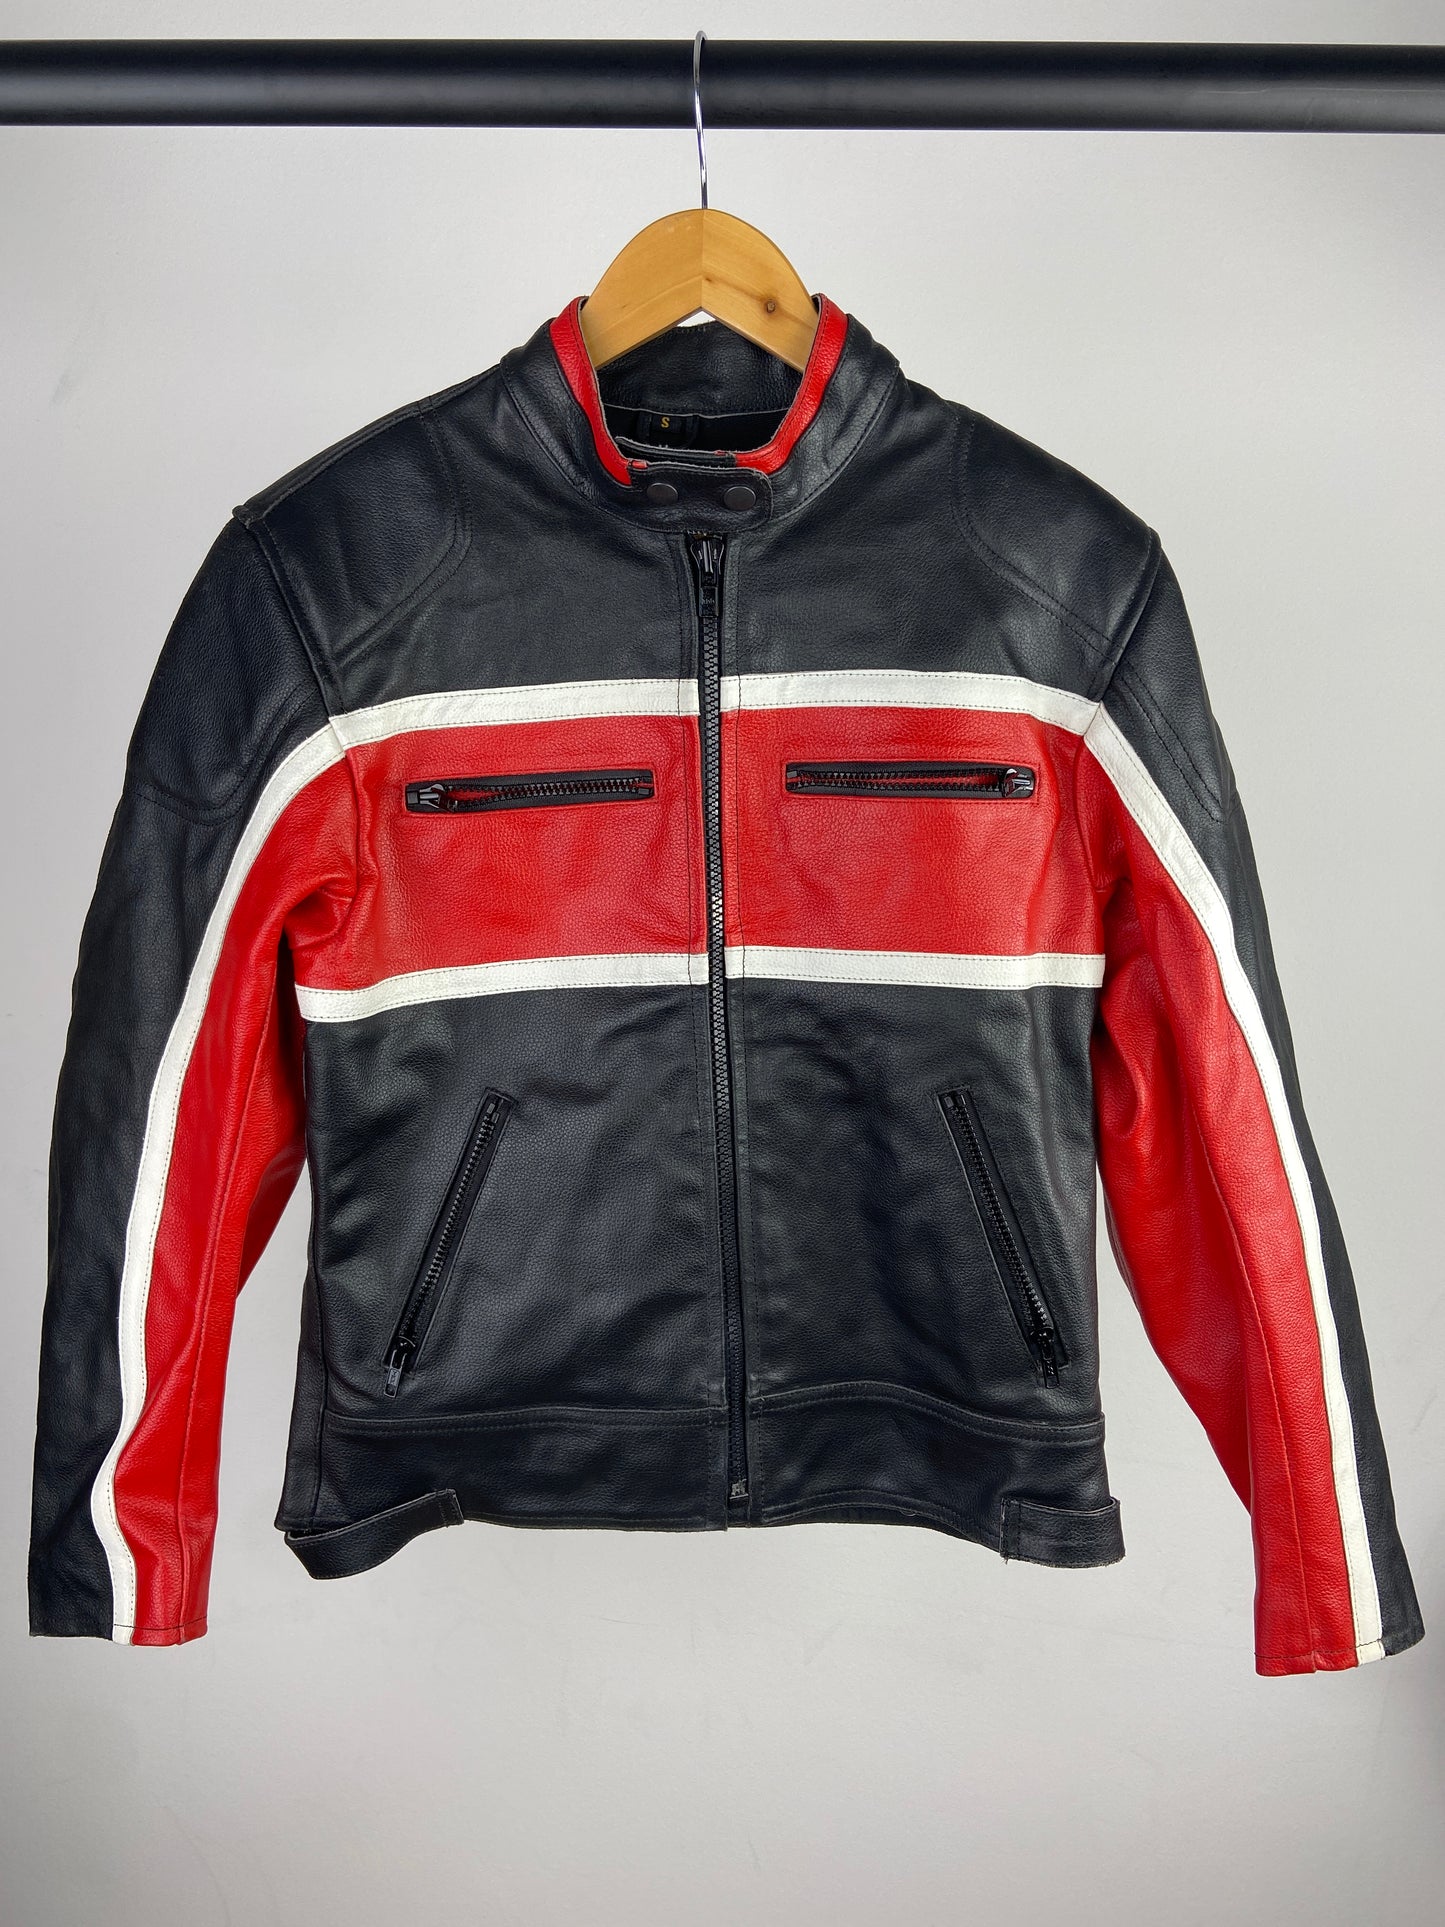 Unbranded 90s Leather Motorbike Jacket